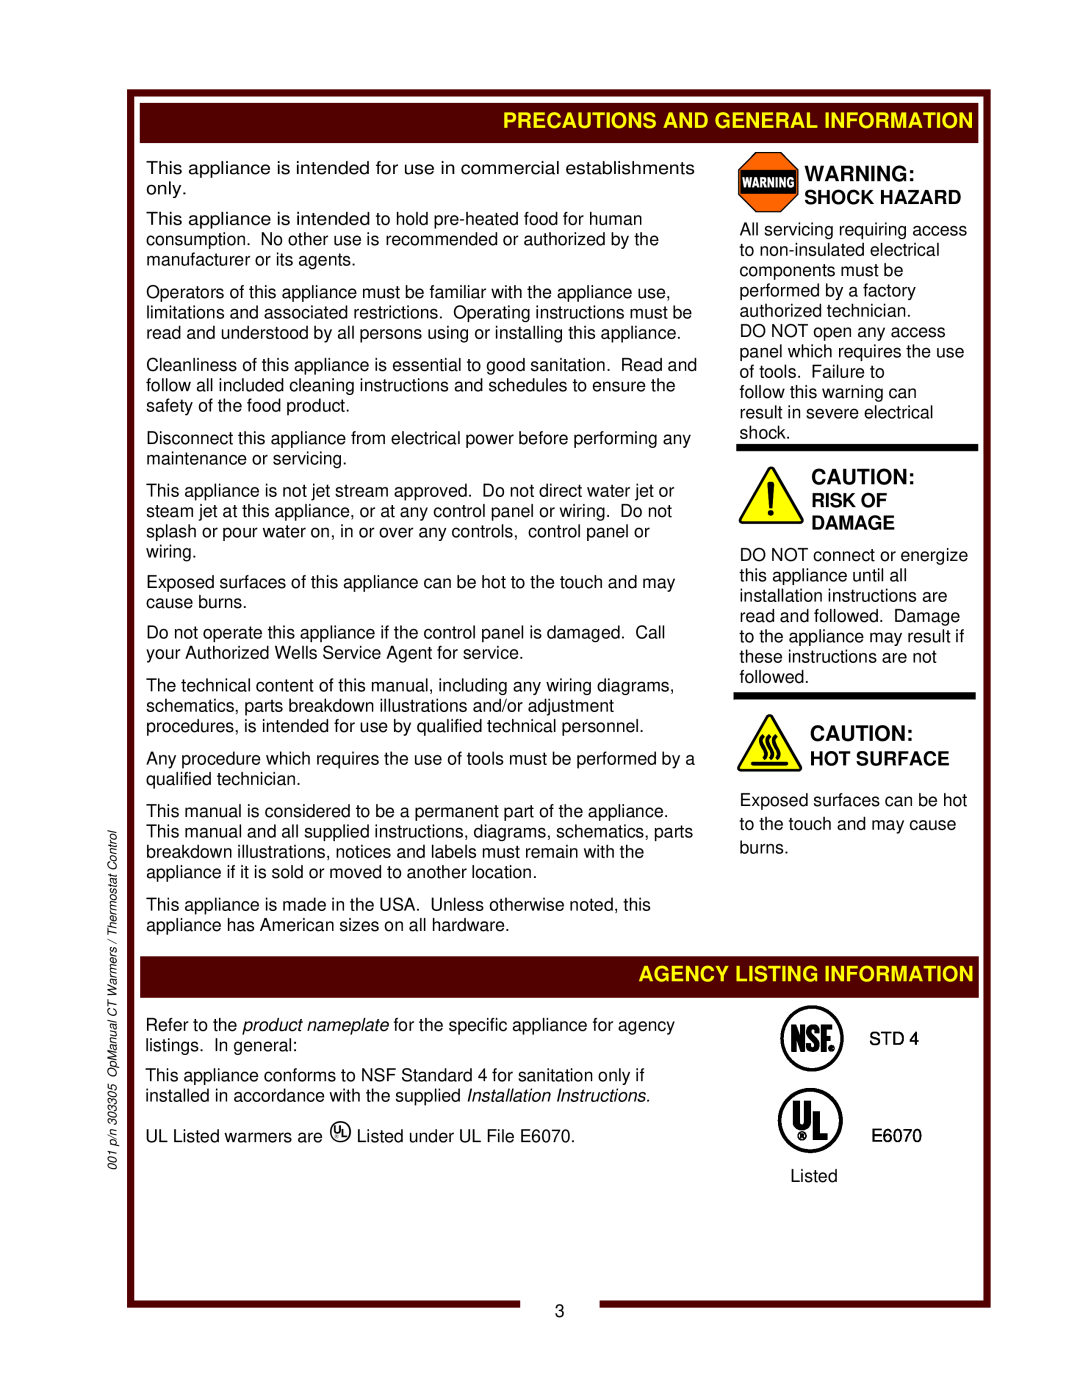 Wells SMPT, SW-10T, TMPT operation manual Agency Listing Information, Shock Hazard, Risk Of Damage, Hot Surface 